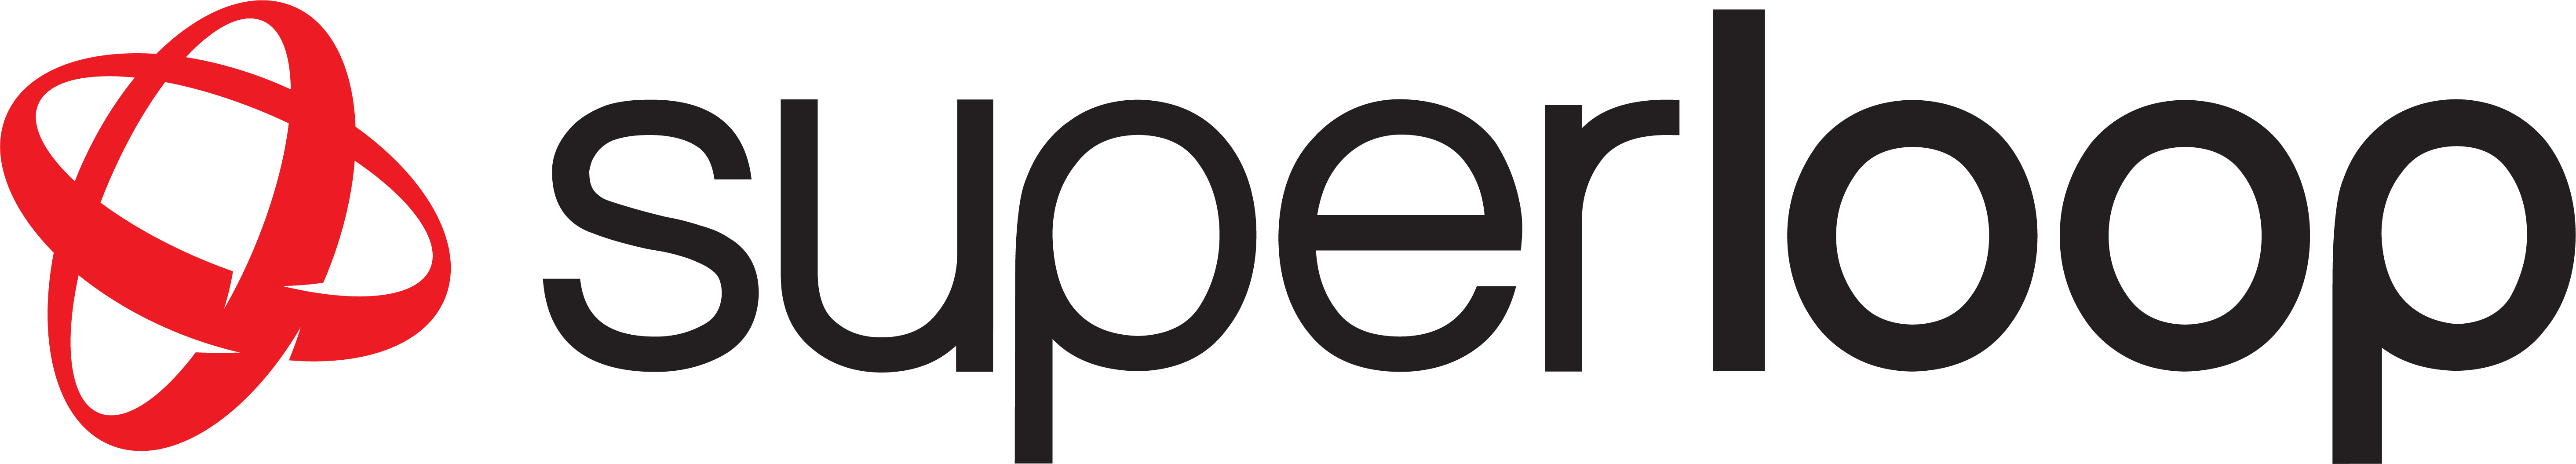 Superloop Logo